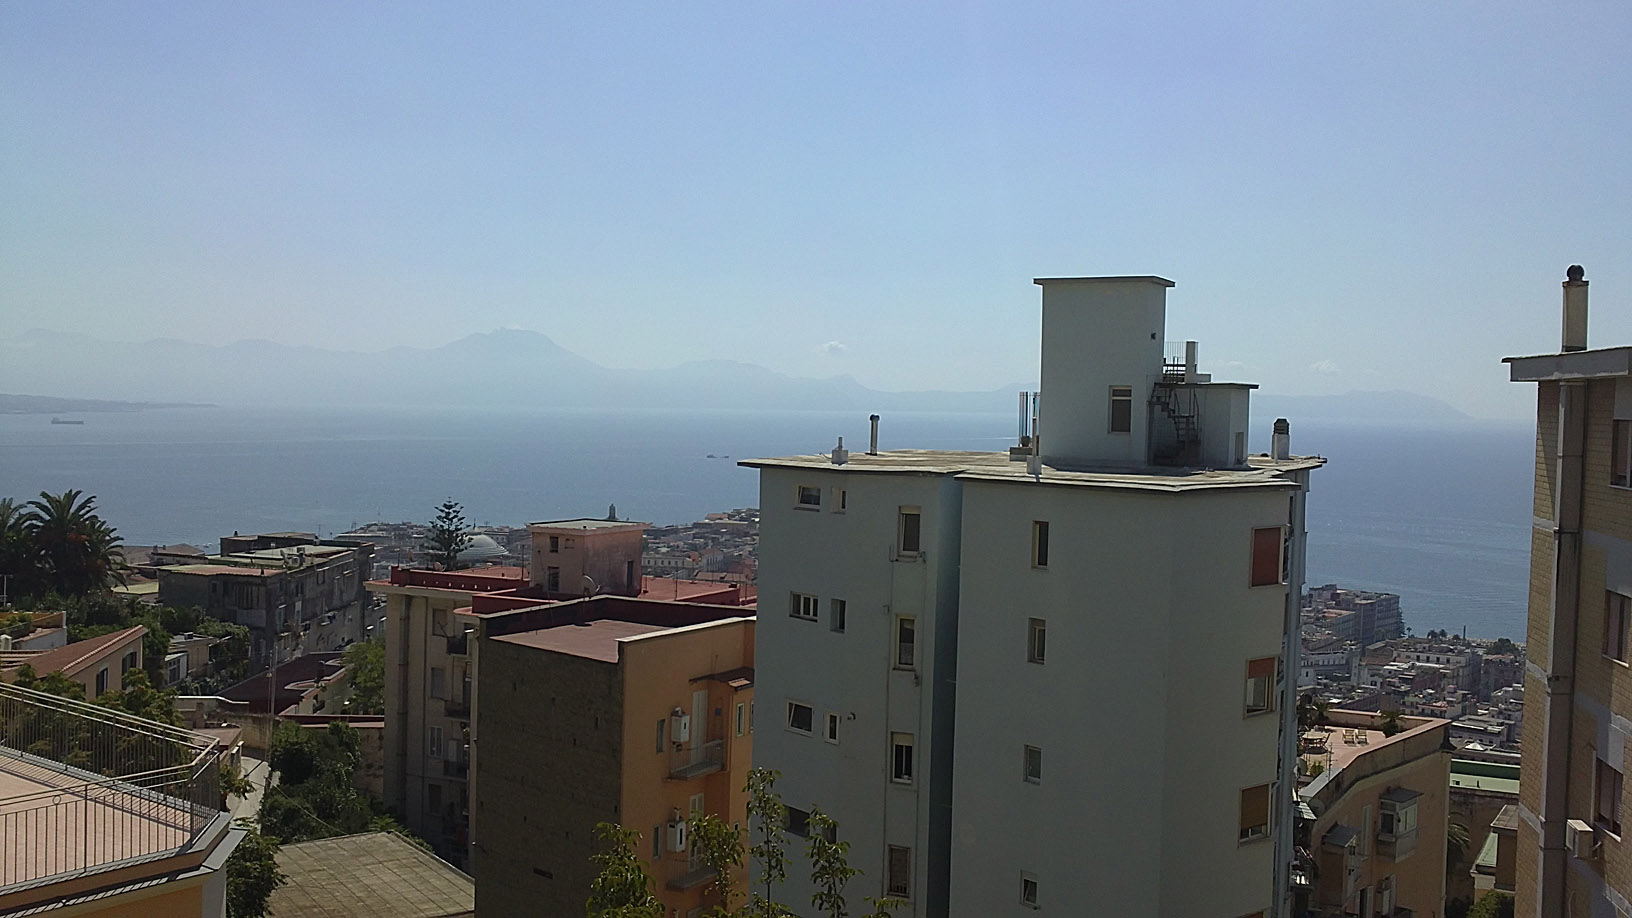 Neapel und Meer